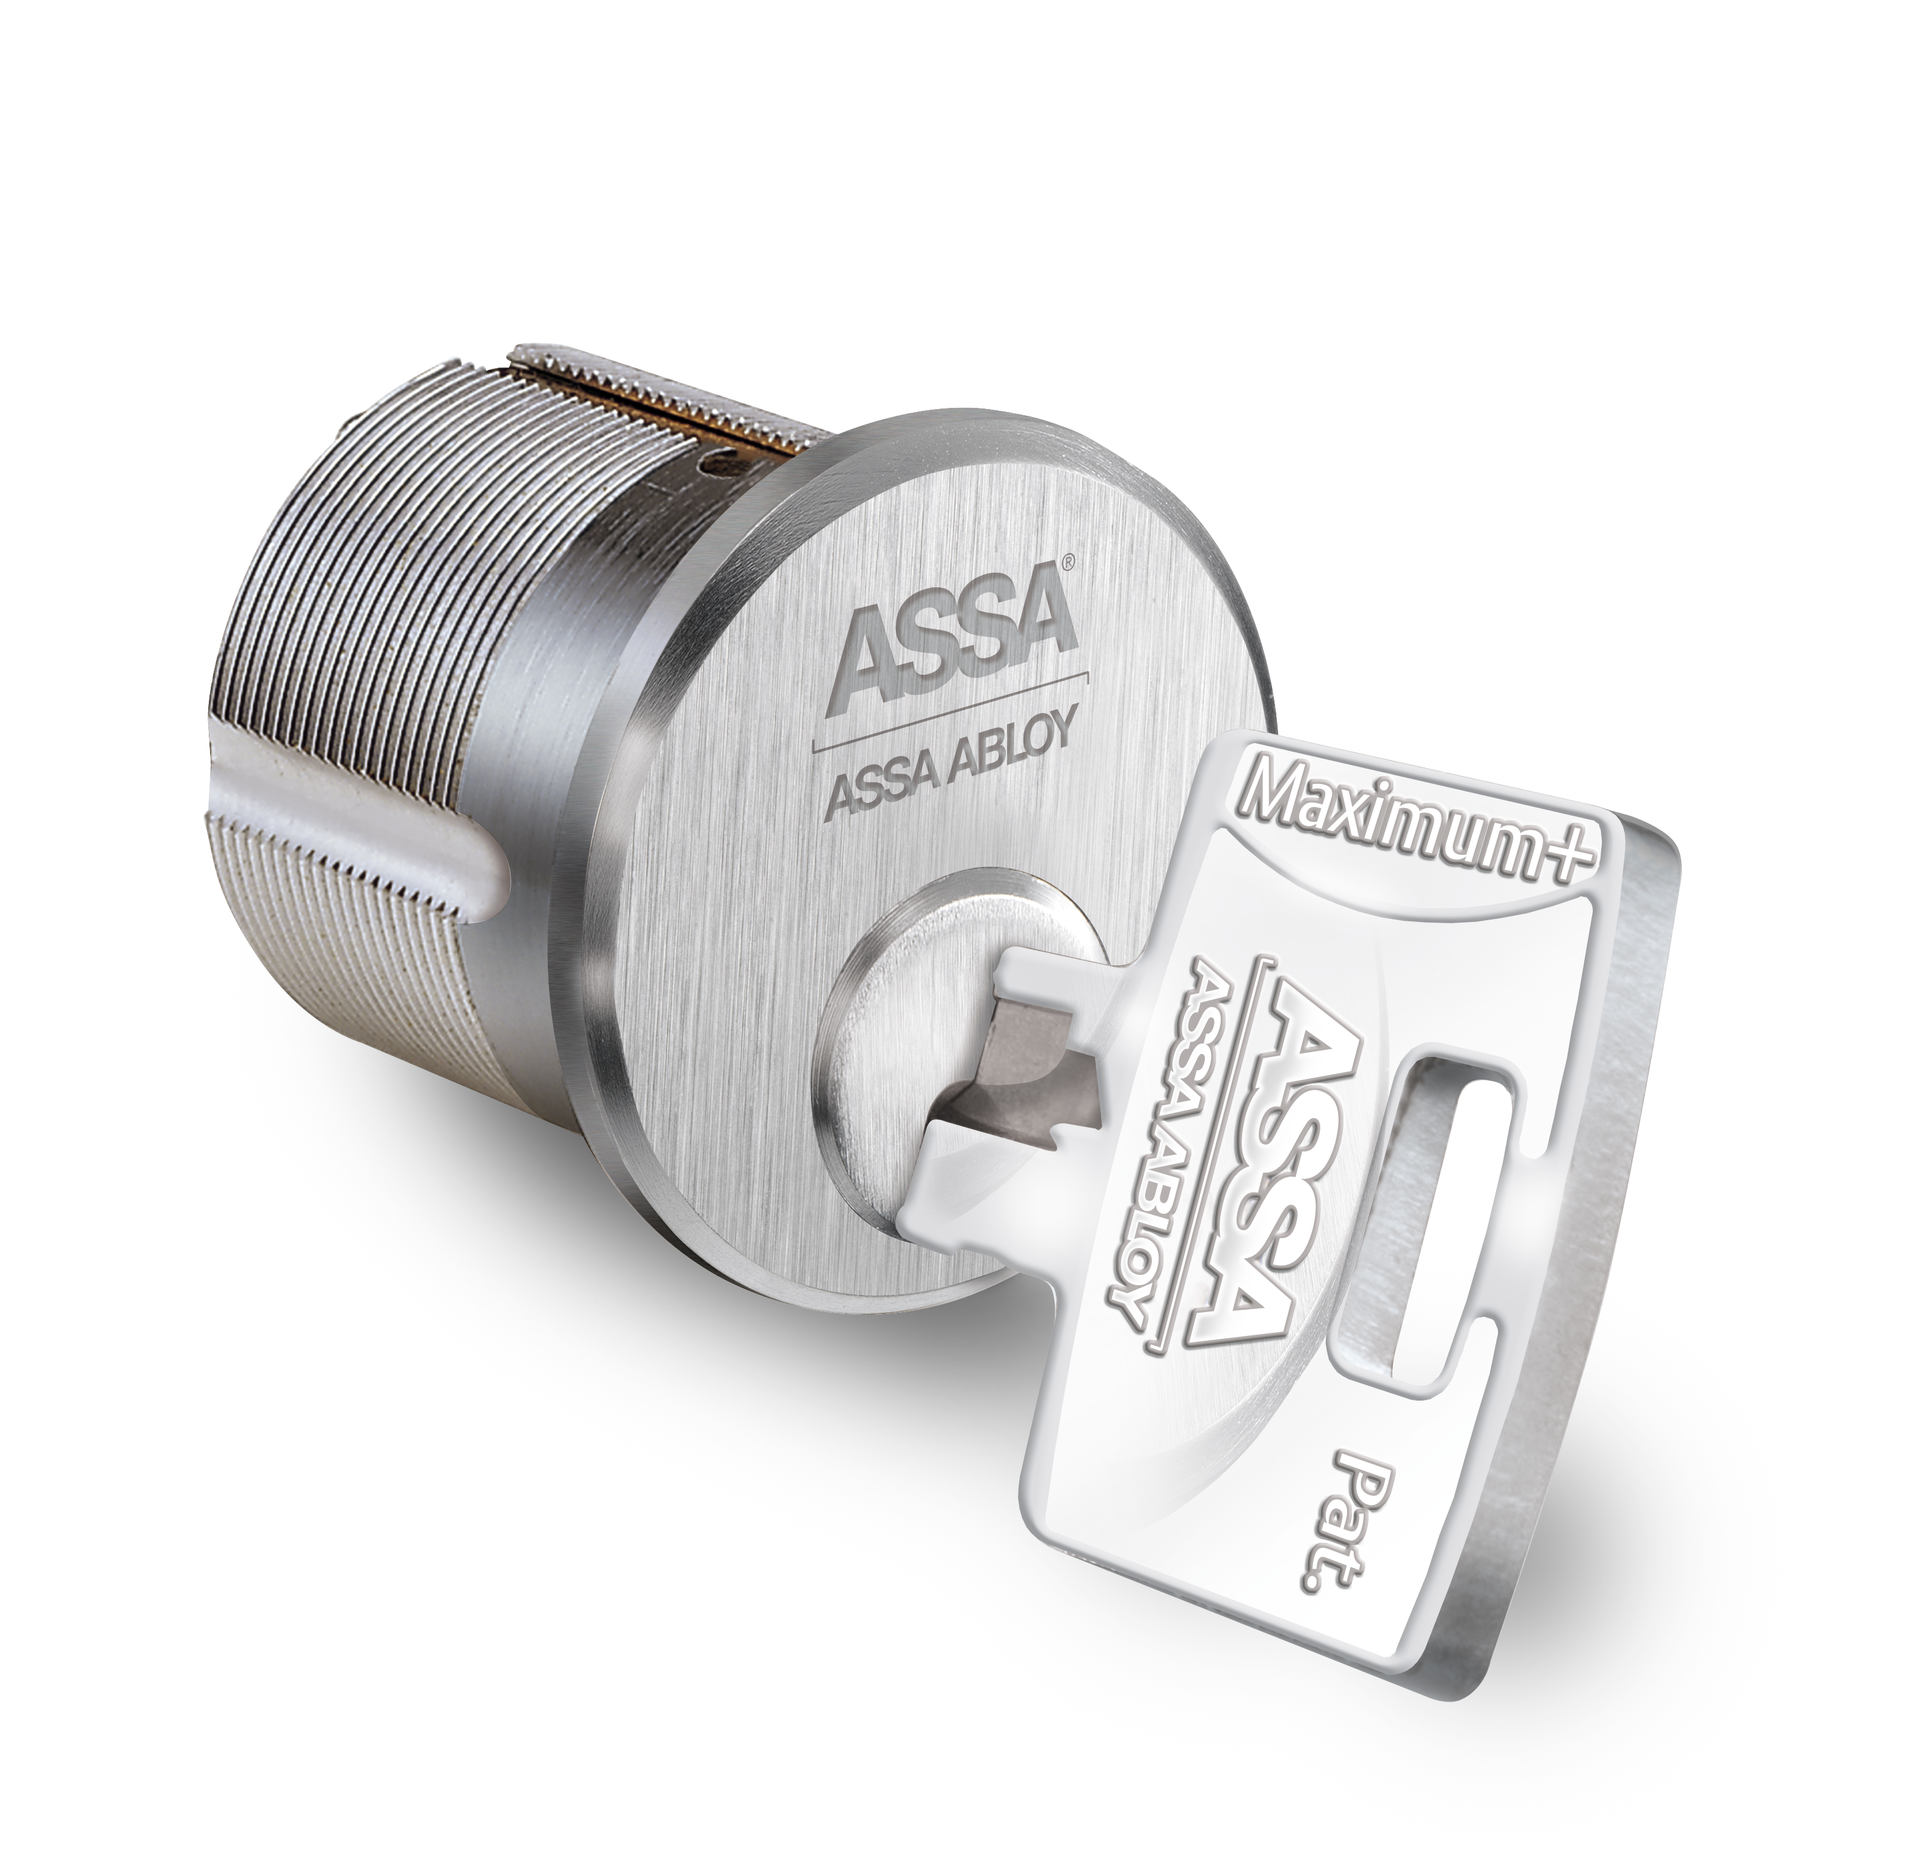 7000 Series Maximum ASSA High Security Restricted Single Cylinder De MAX+ 